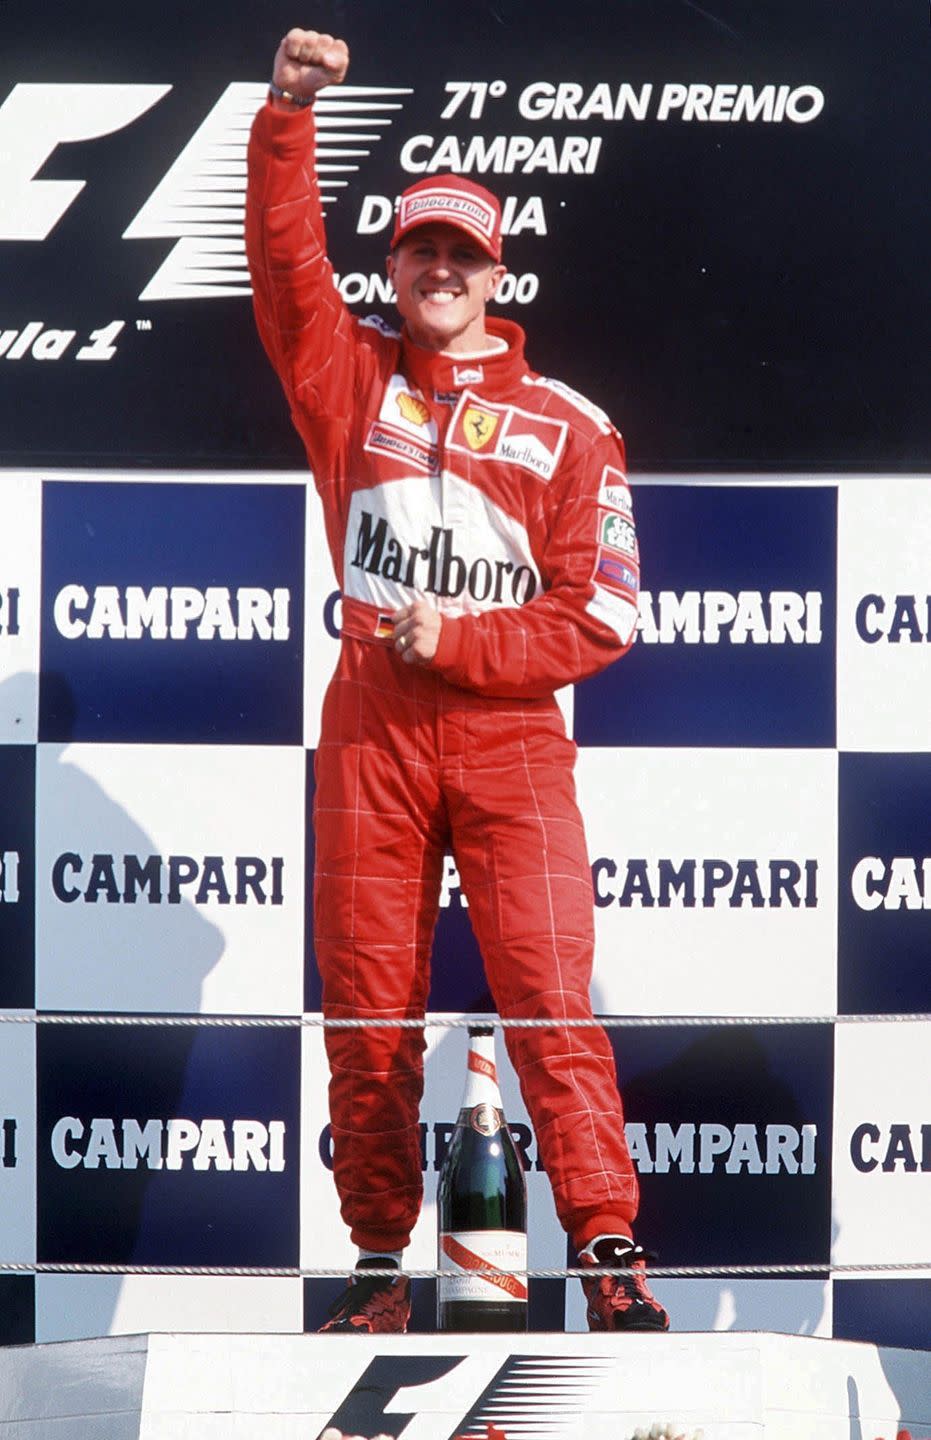 1999: Michael Schumacher